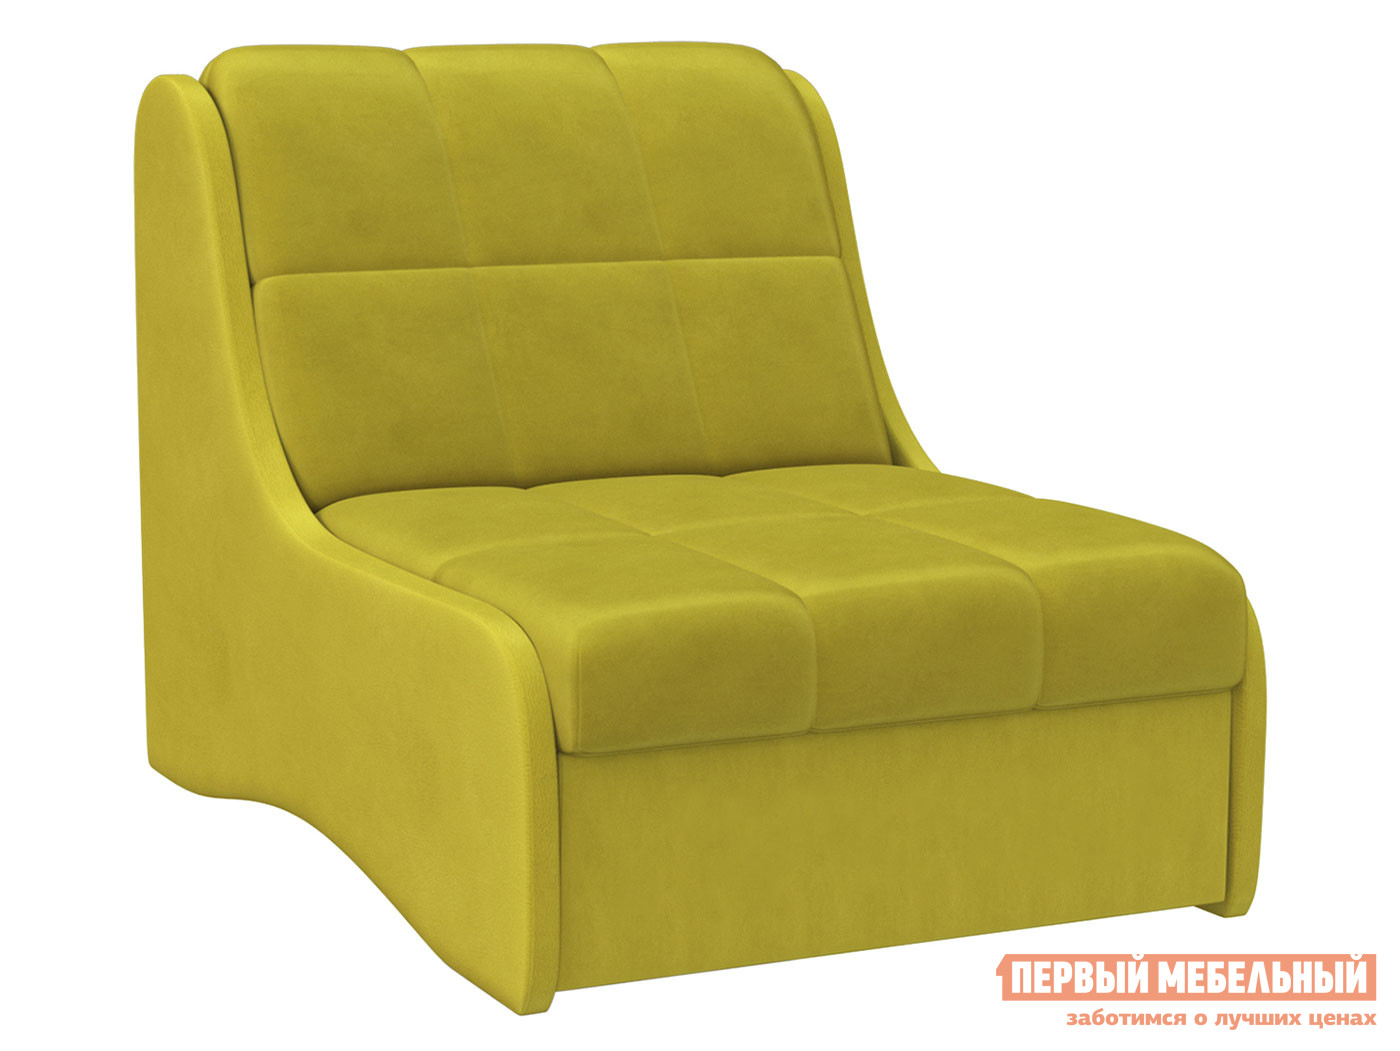 Кресло-кровать  Токио Желтый, велюр, Пенополиуретан, 86x200 мм